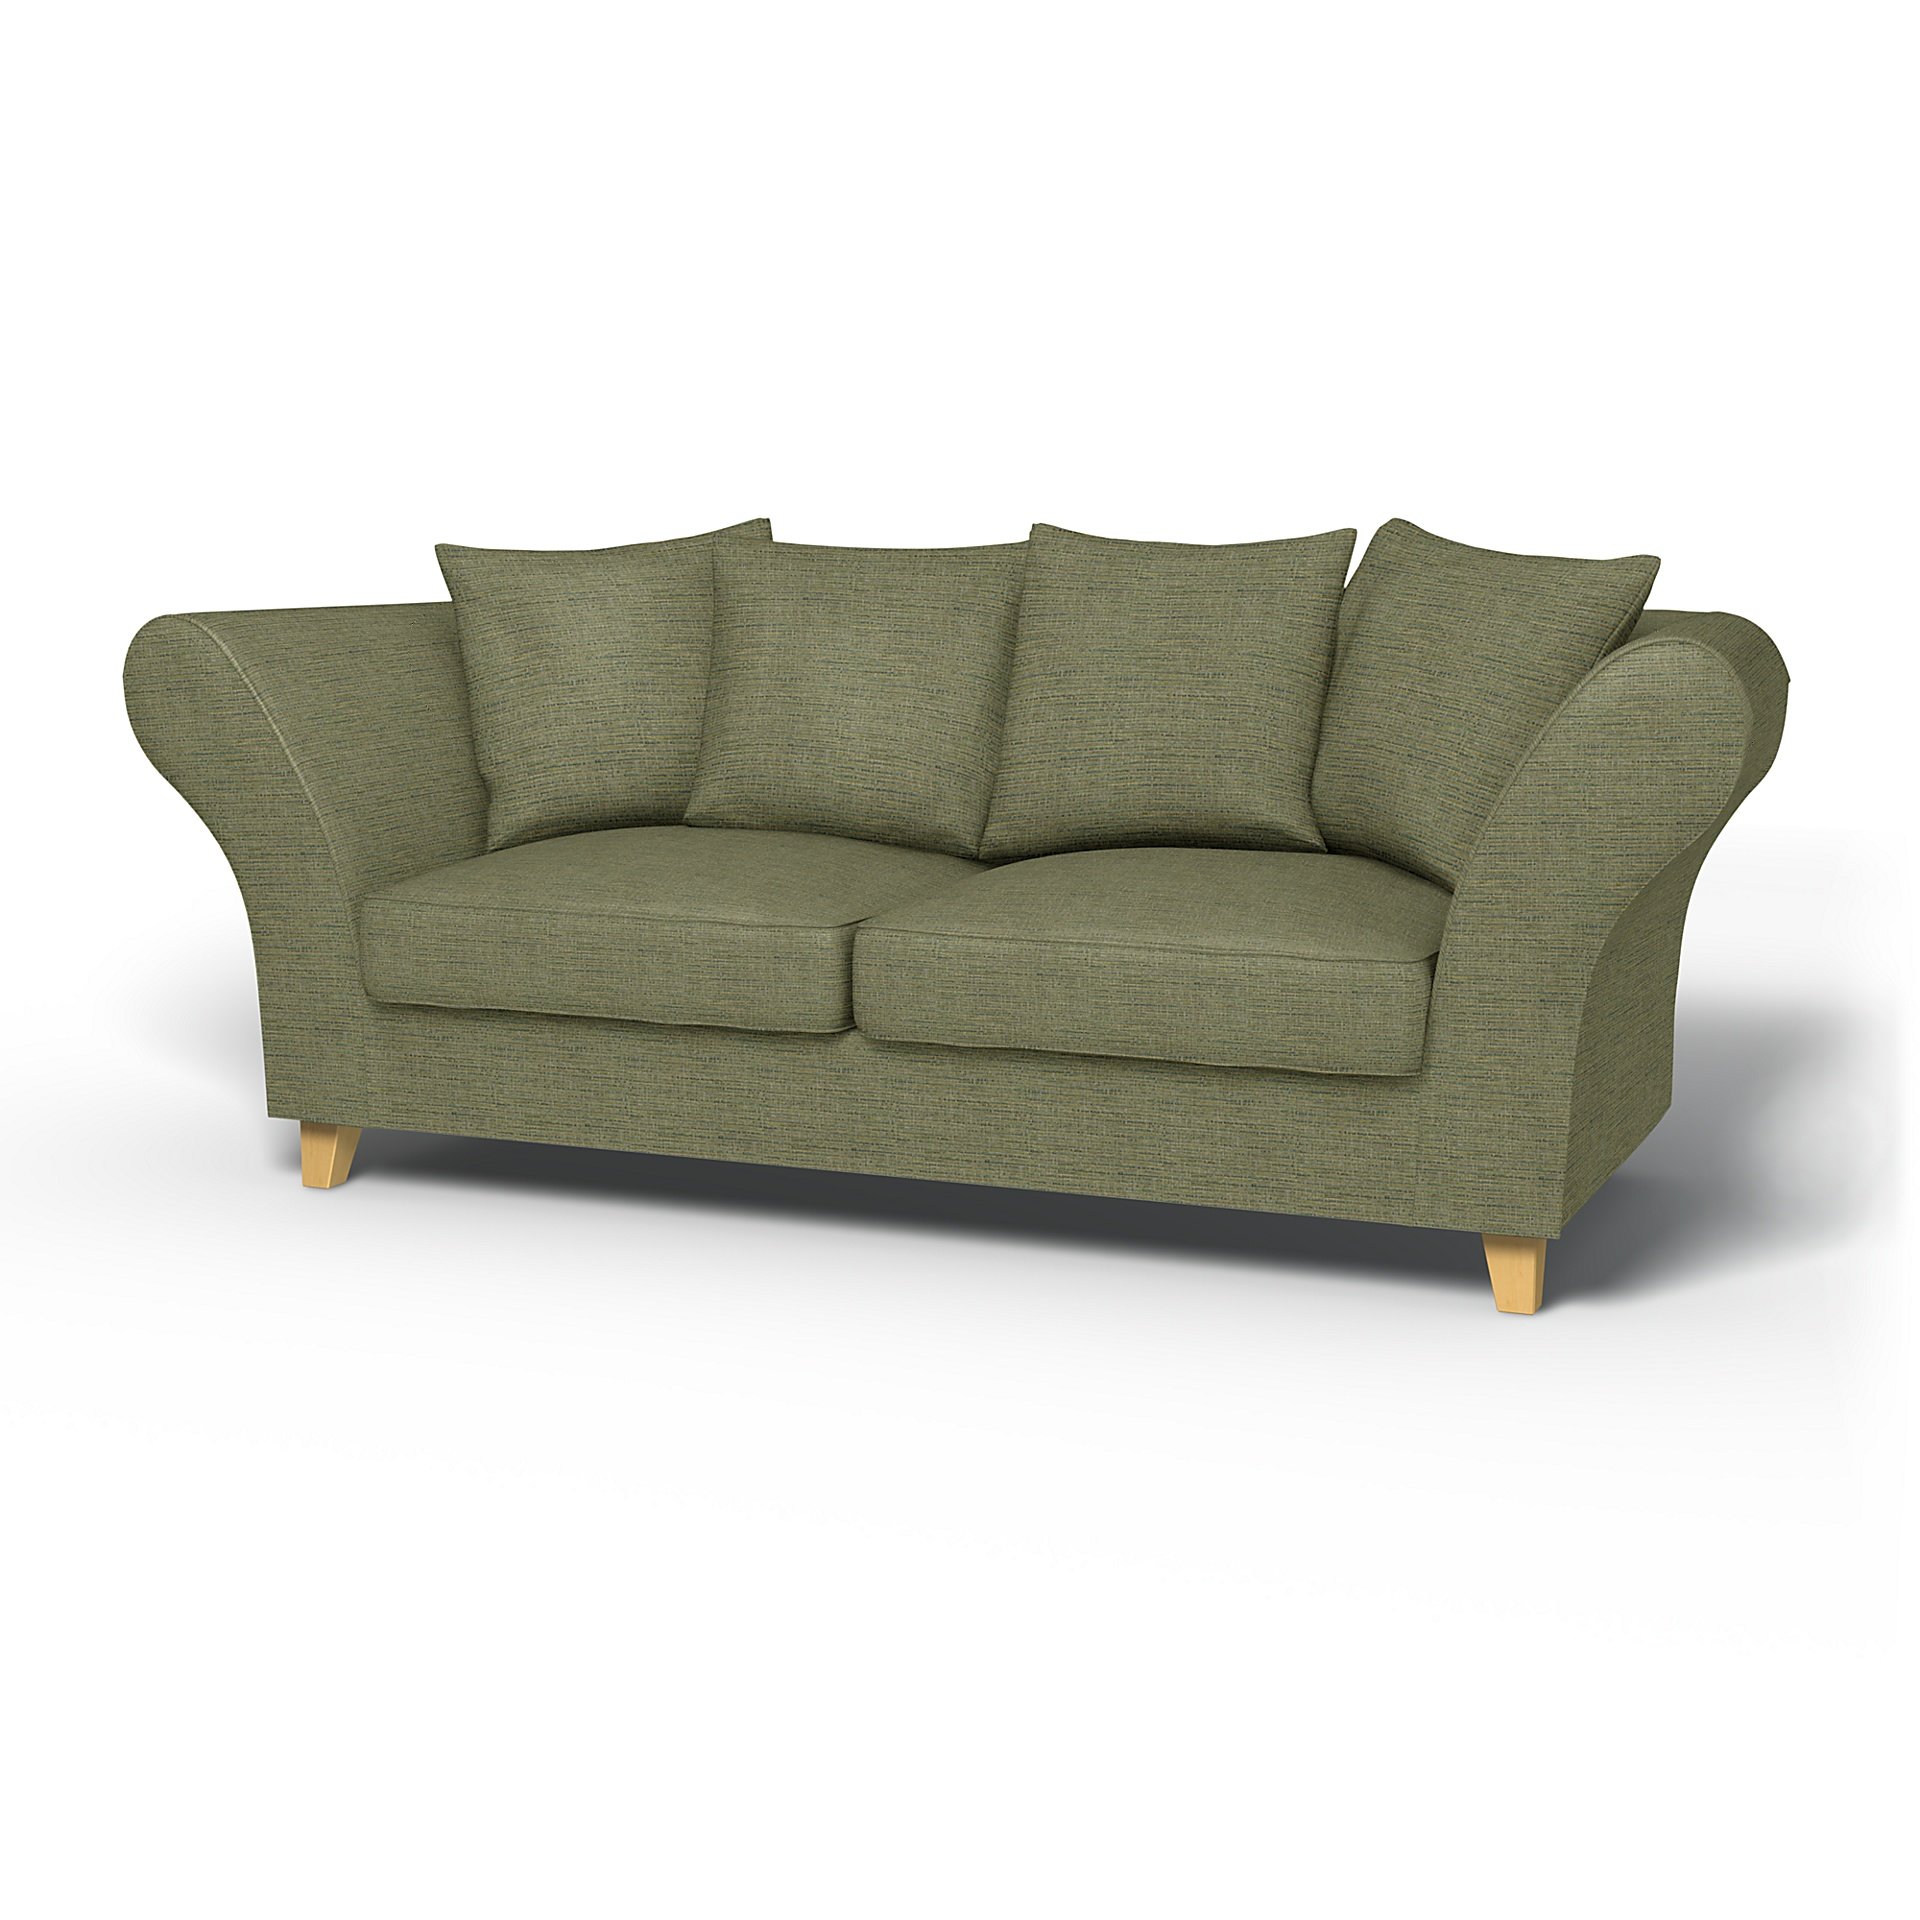 IKEA - Backa 2.5 Seater Sofa Cover, Meadow Green, Boucle & Texture - Bemz